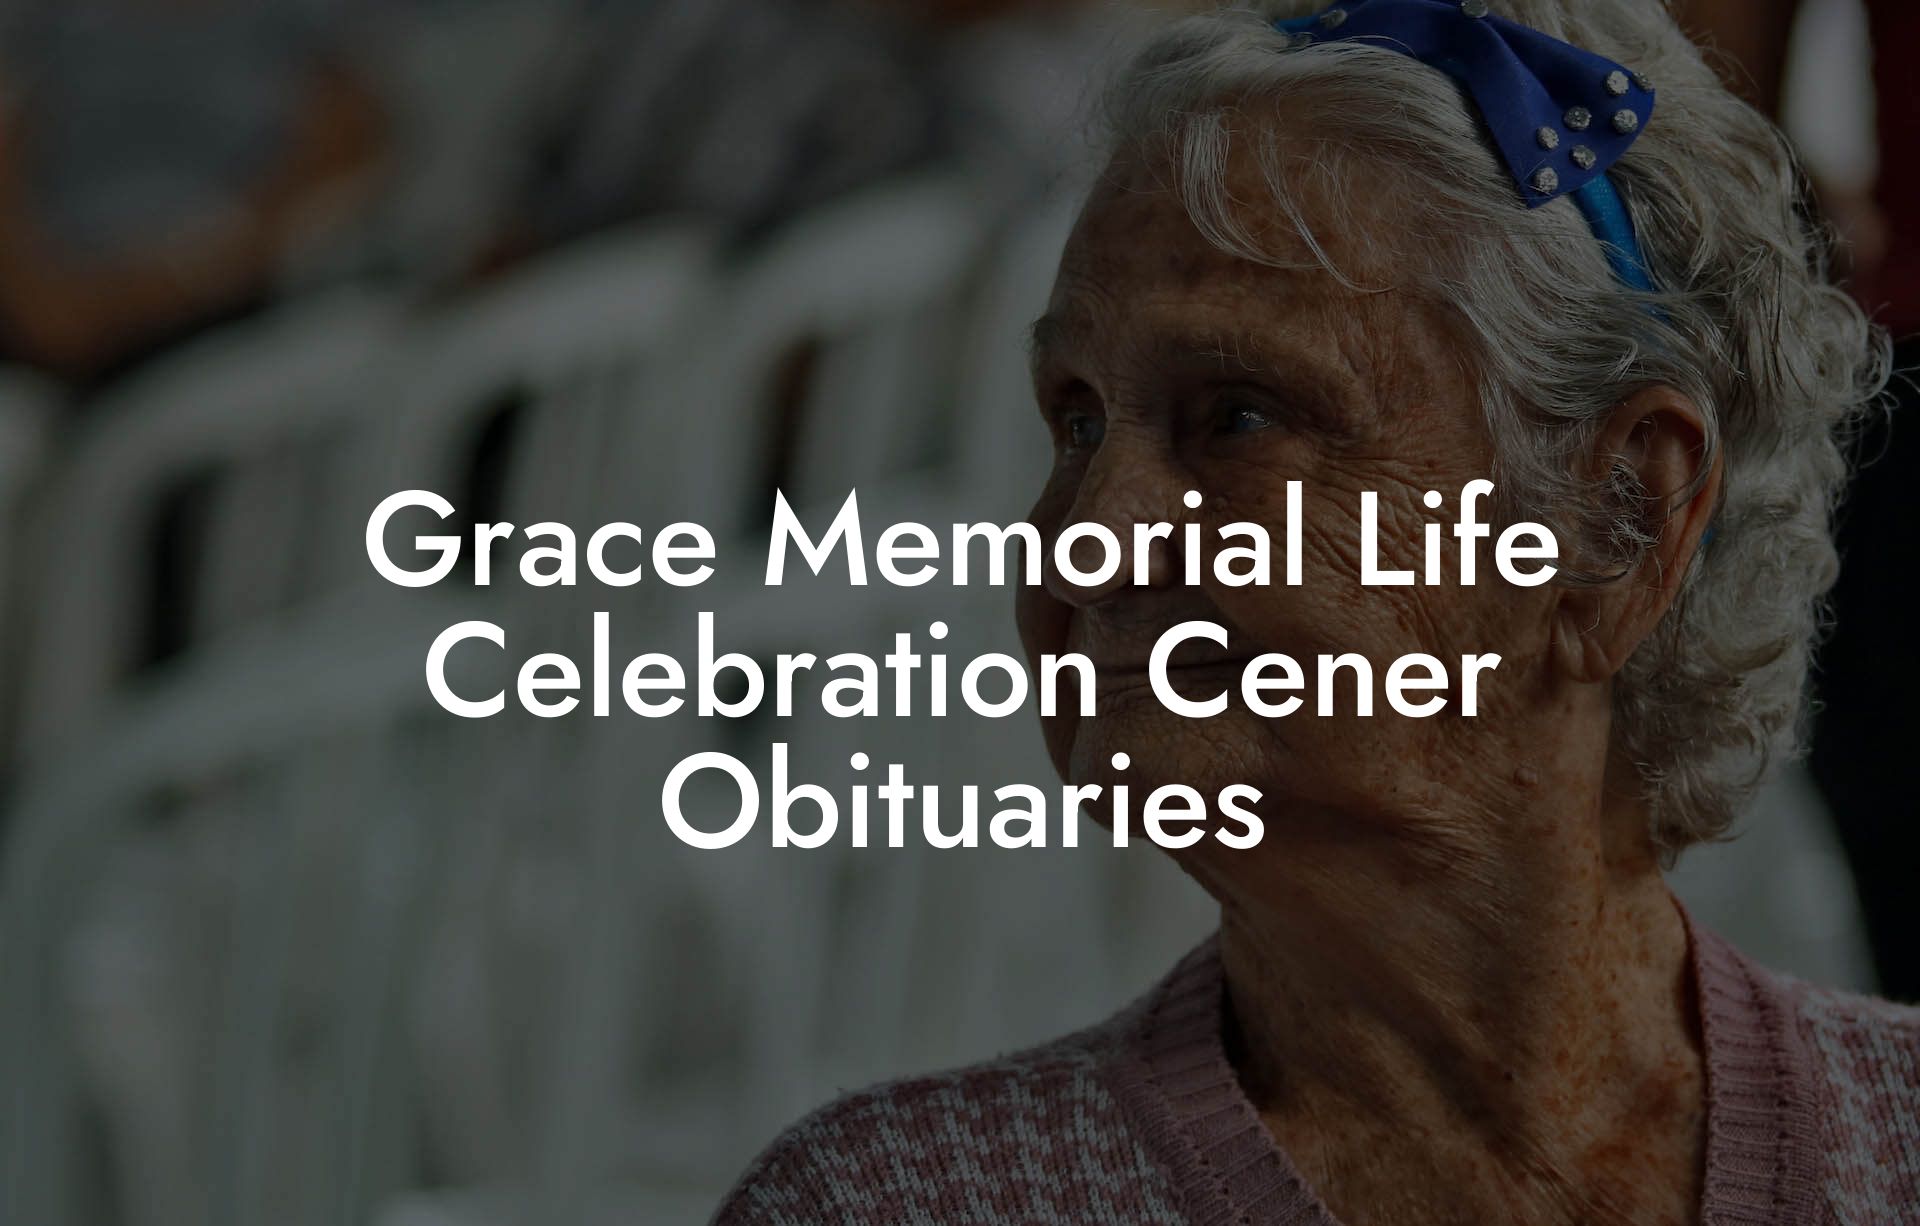 Grace Memorial Life Celebration Cener Obituaries